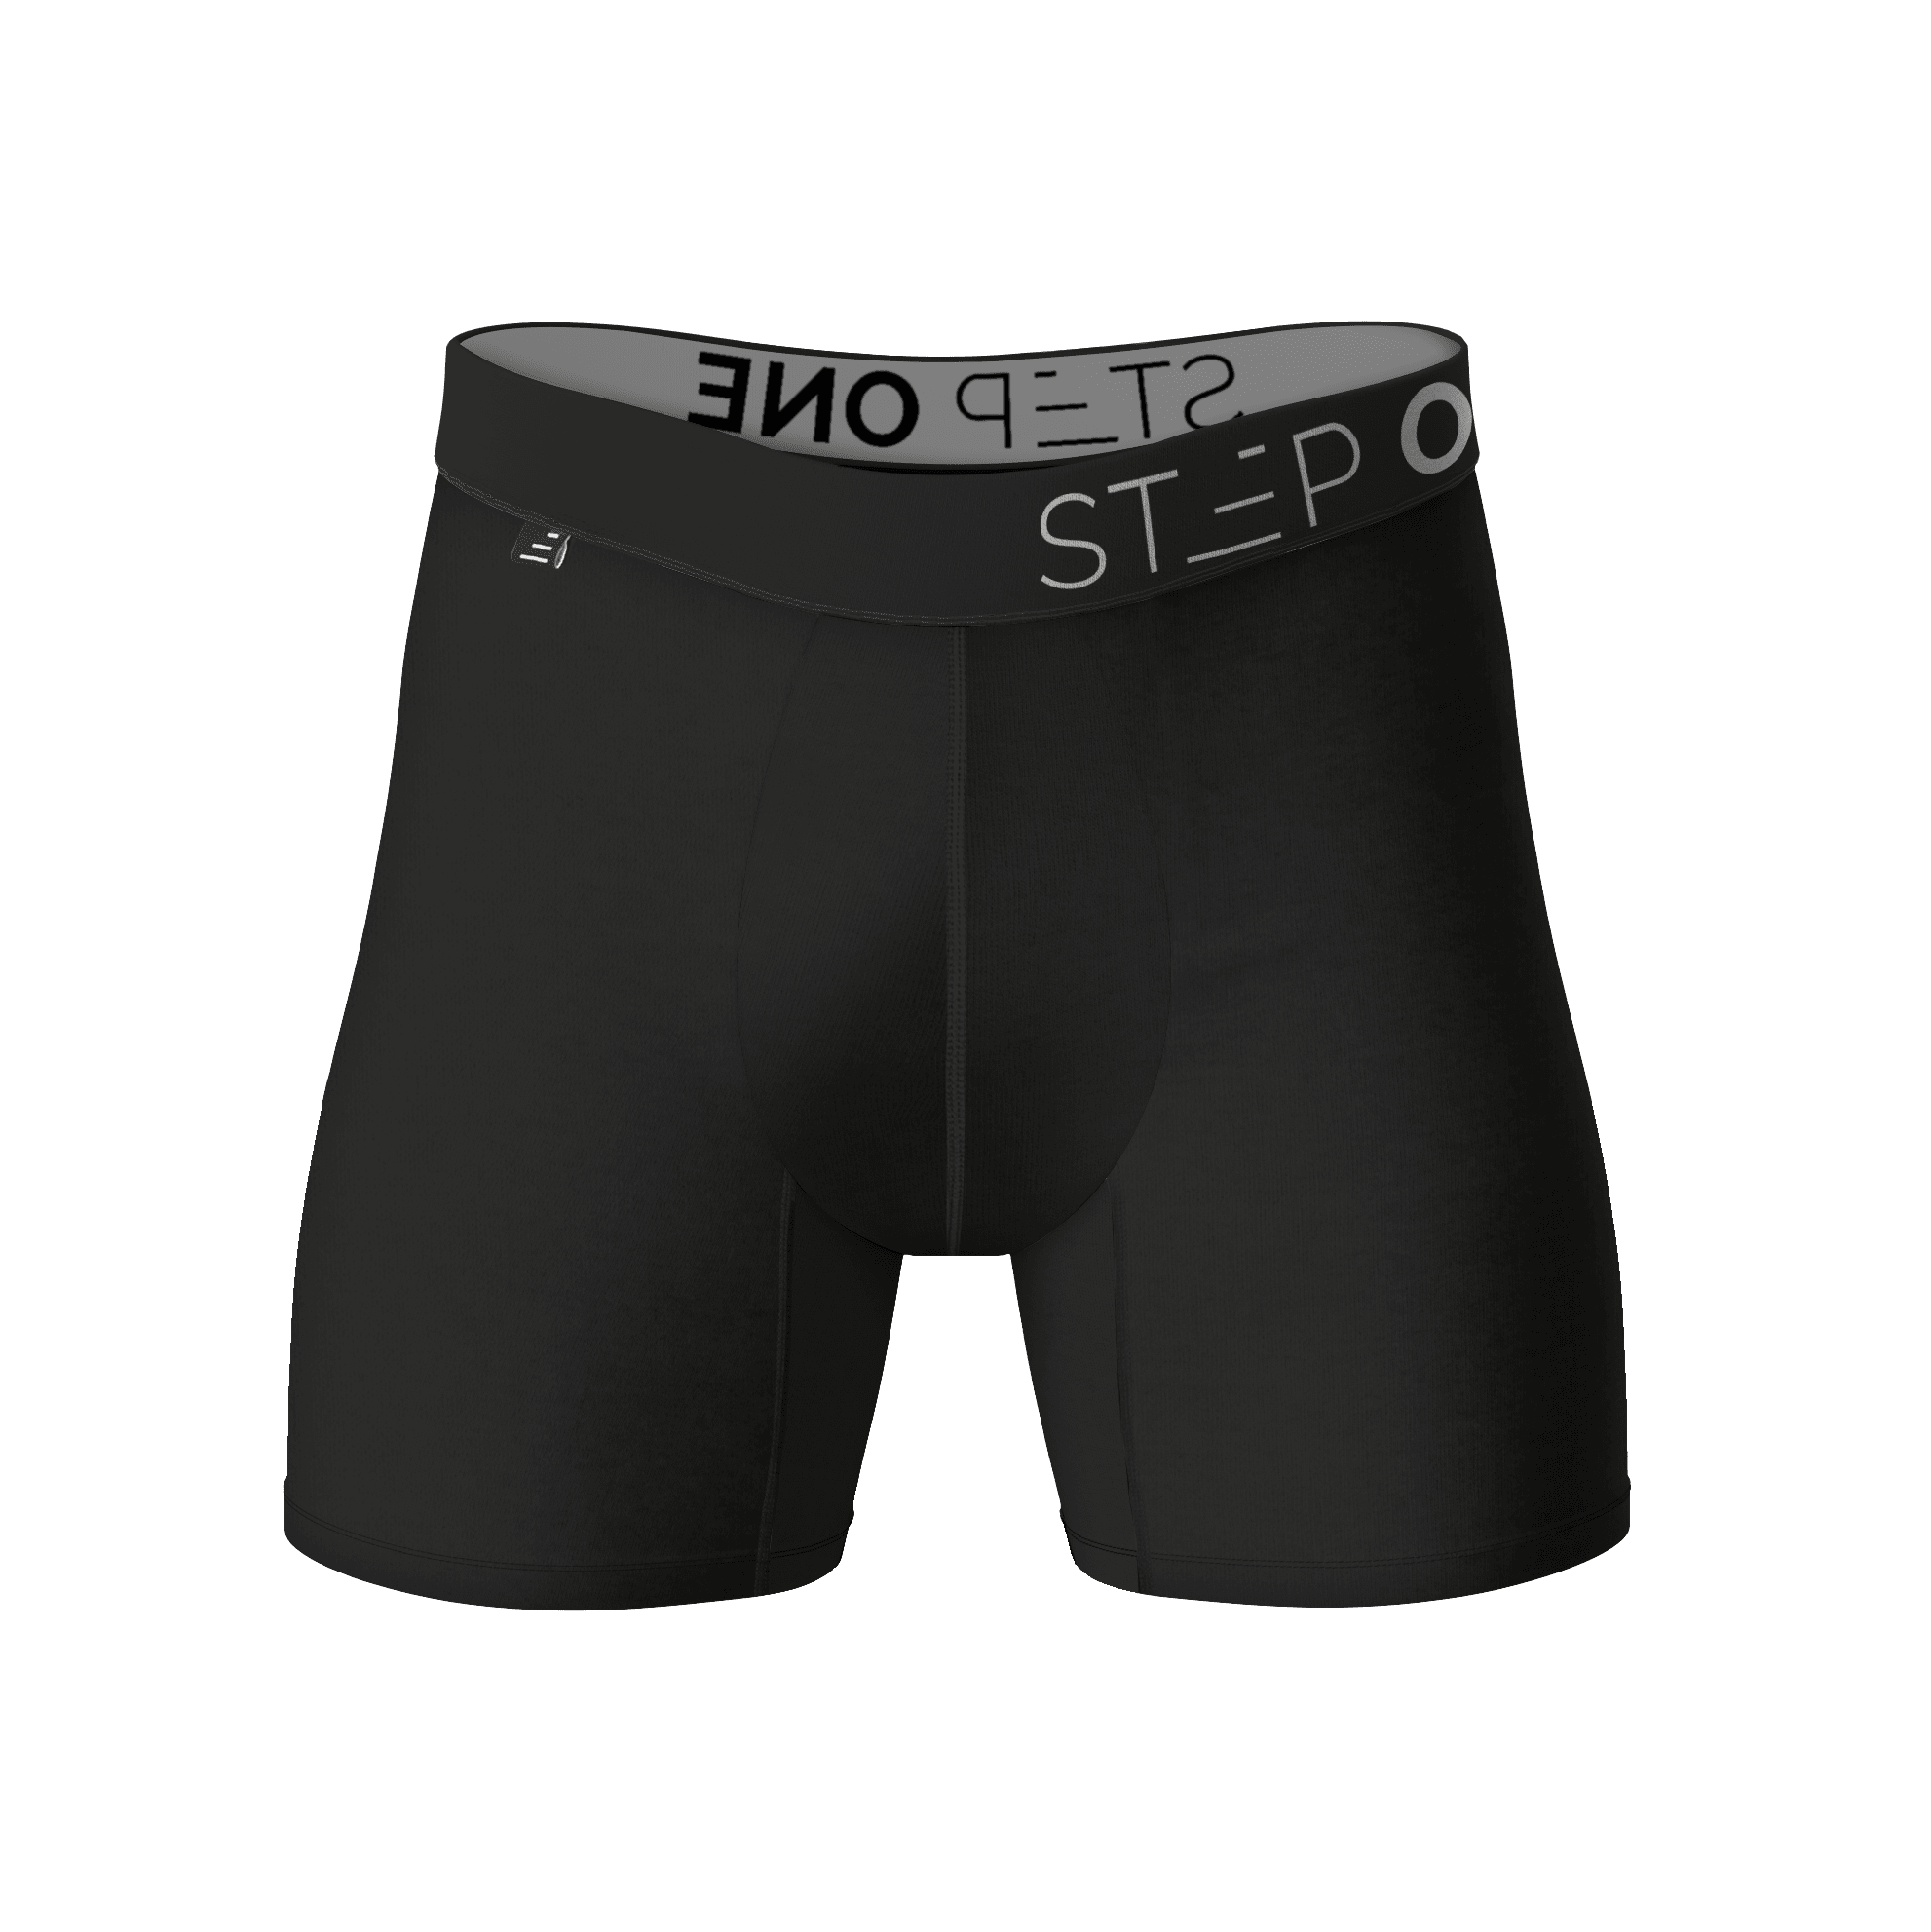 Super Soft Boxer Briefs - Anti-Chafe & No Ride Up Design - Three Pack -  Black, JustWears